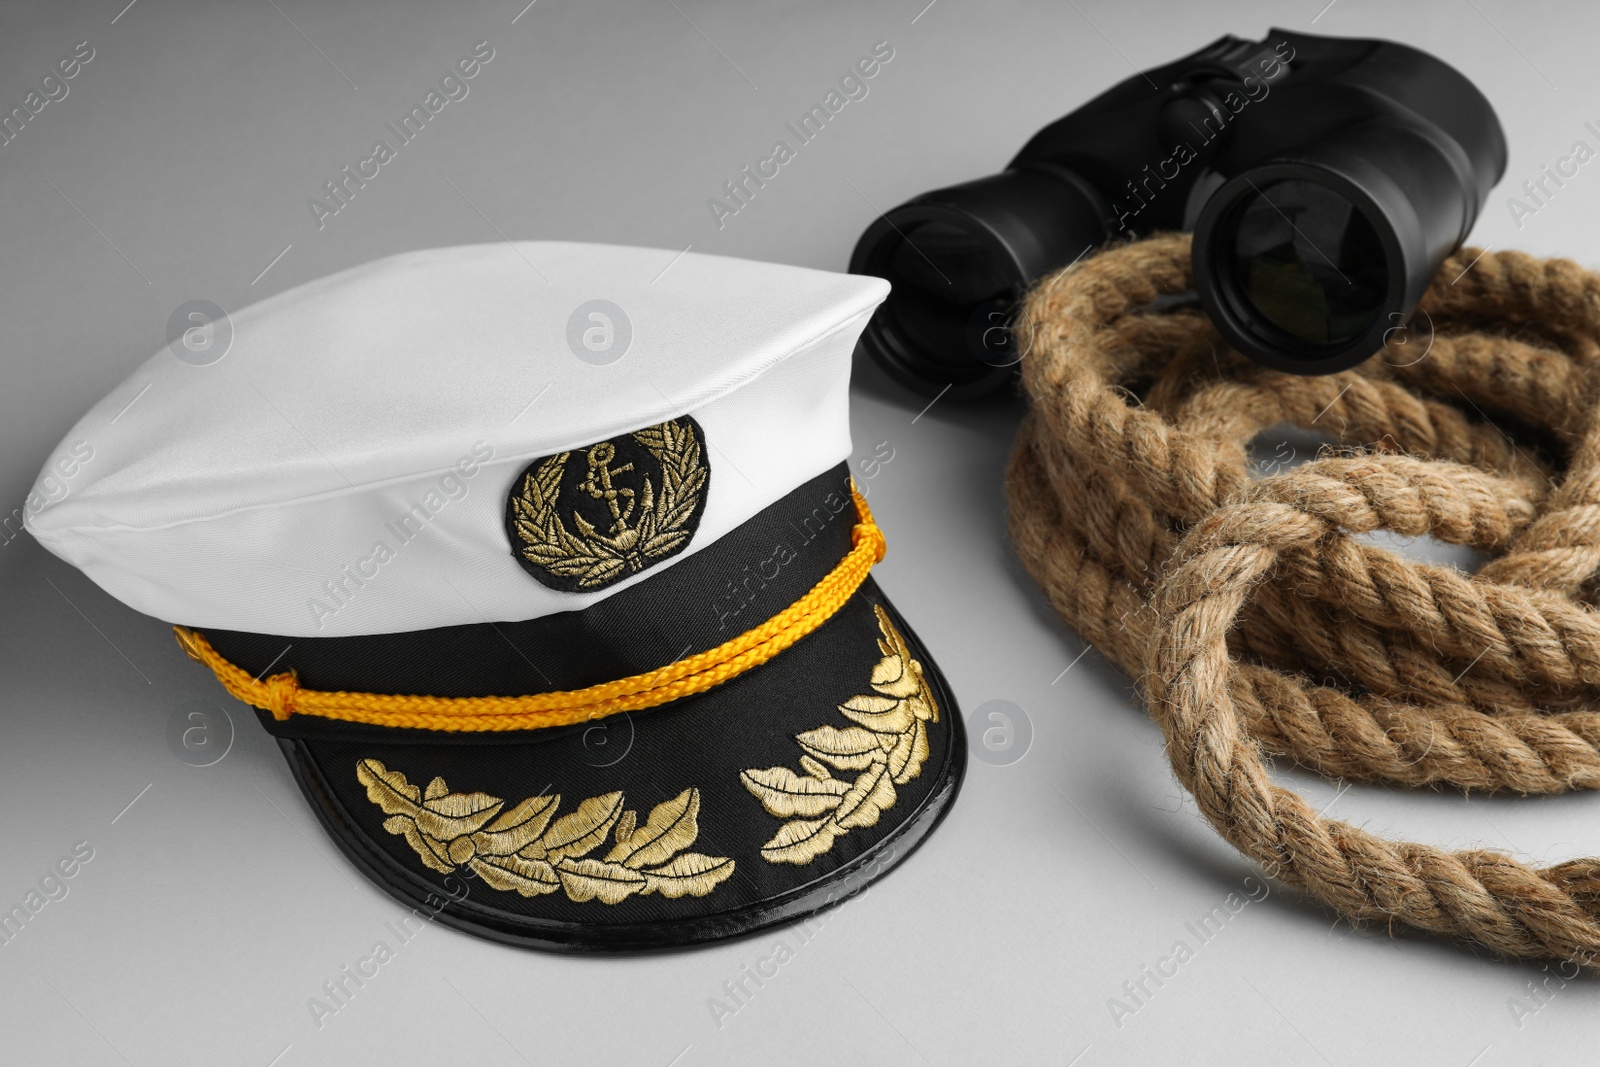 Photo of Peaked cap, rope and binoculars on light grey background